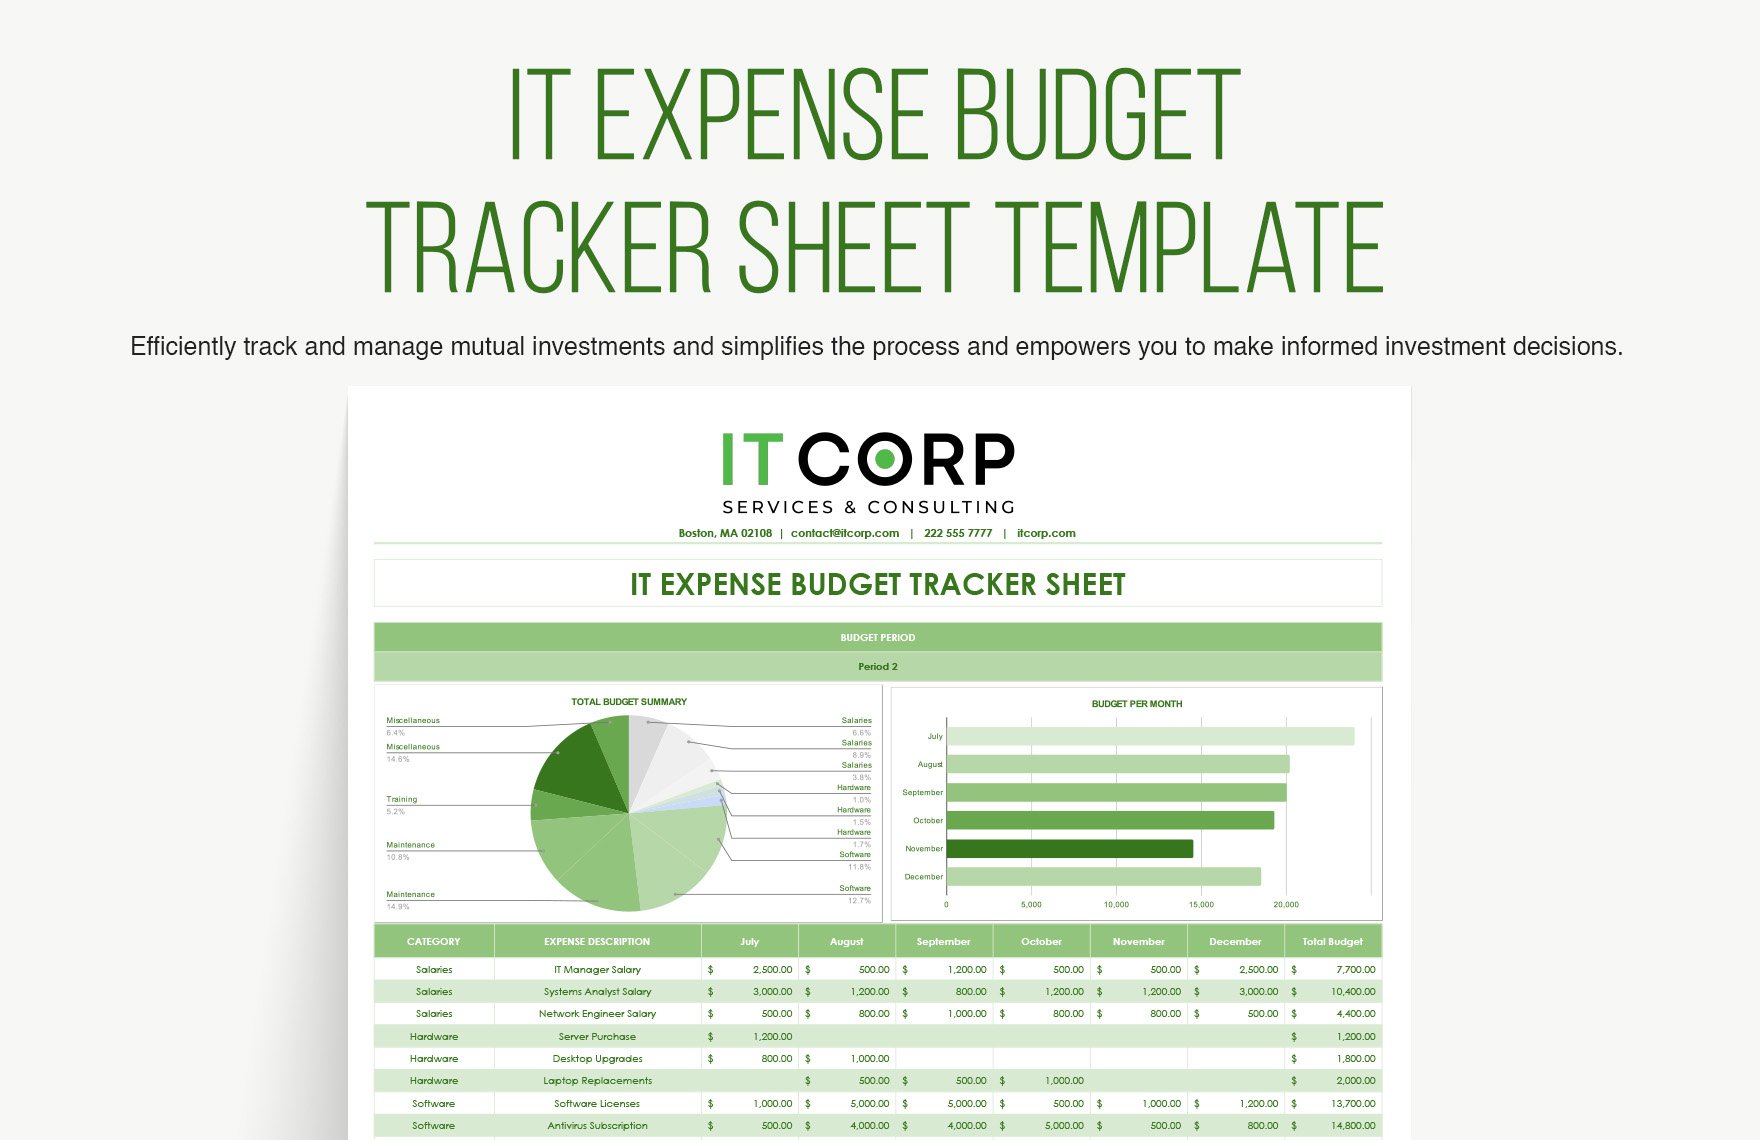 IT Expense Budget Tracker Sheet Template